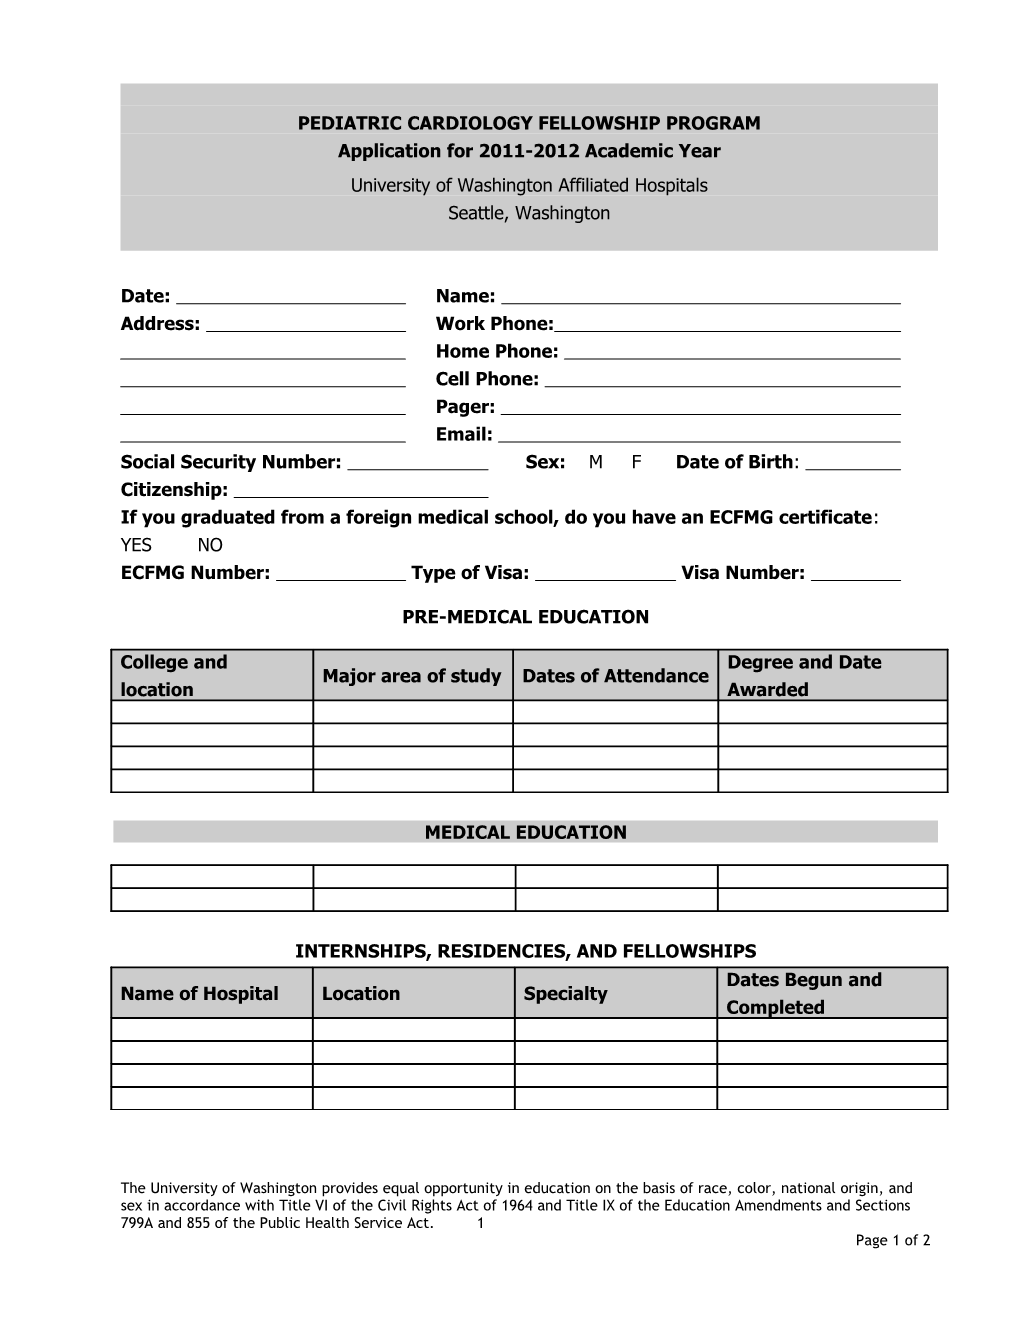 Pediatric Cardiology Fellowship Application 2011-2012